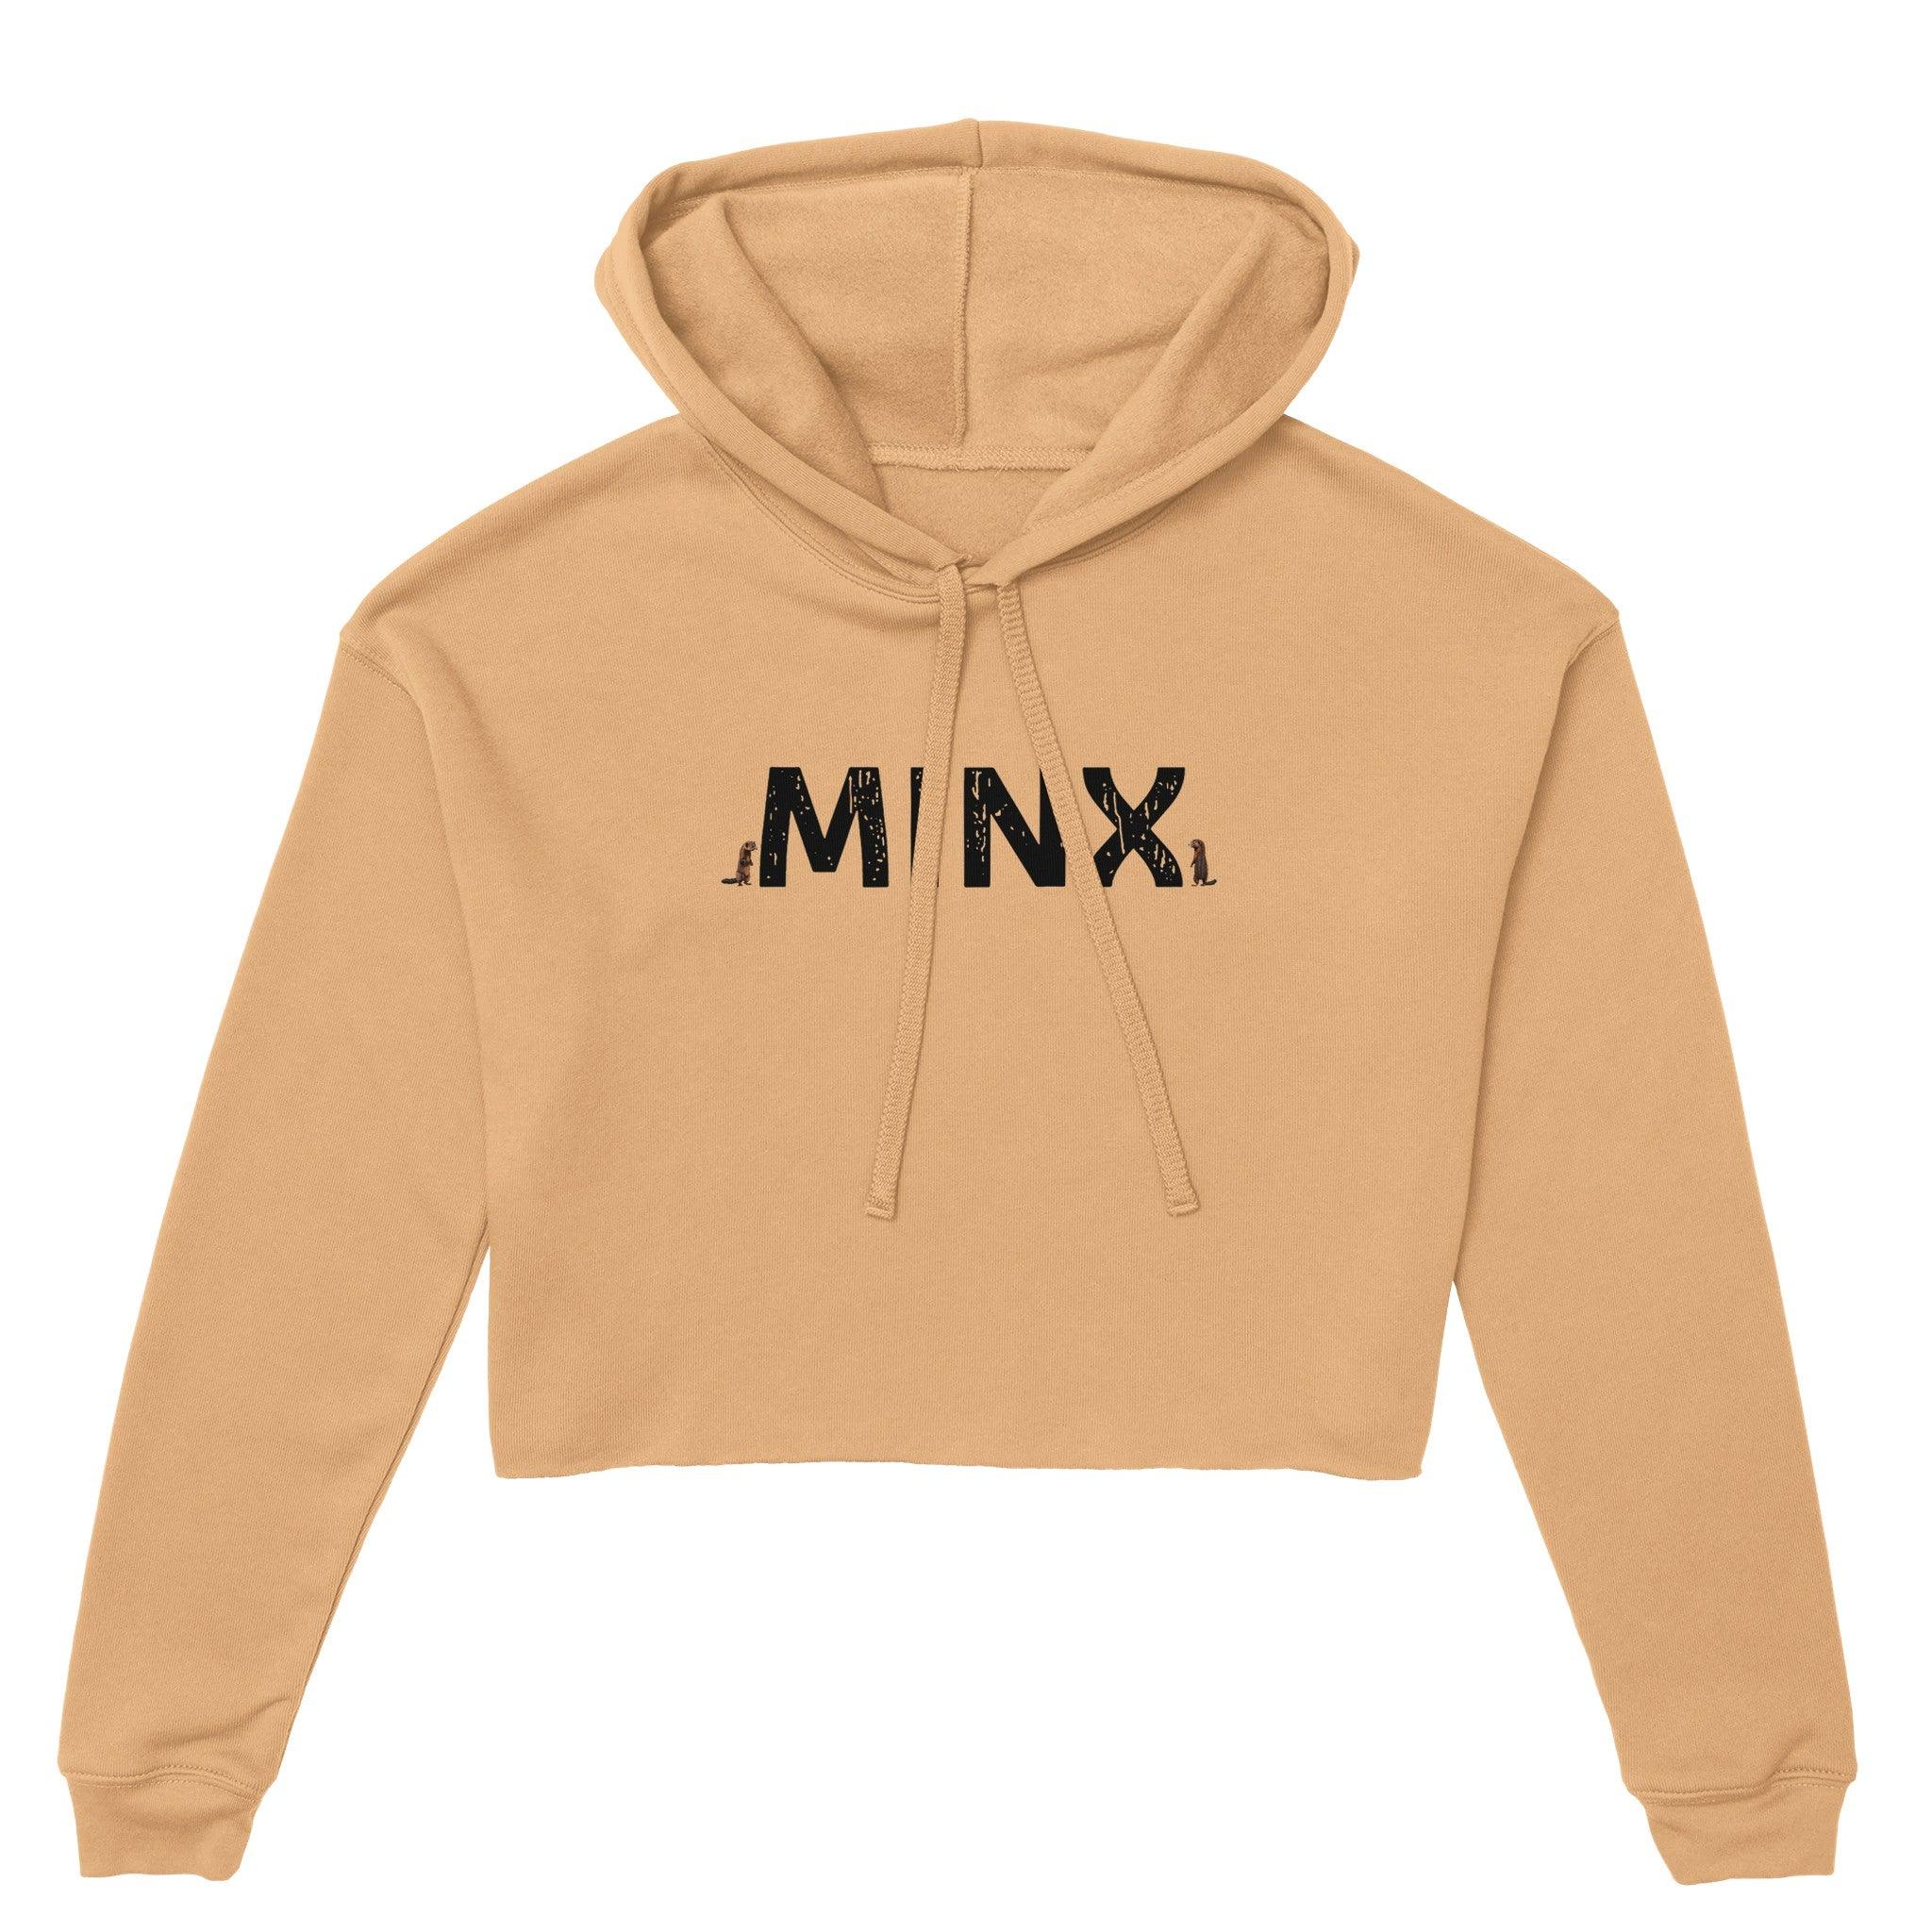 'Minx' Cropped Hoodie - POMA